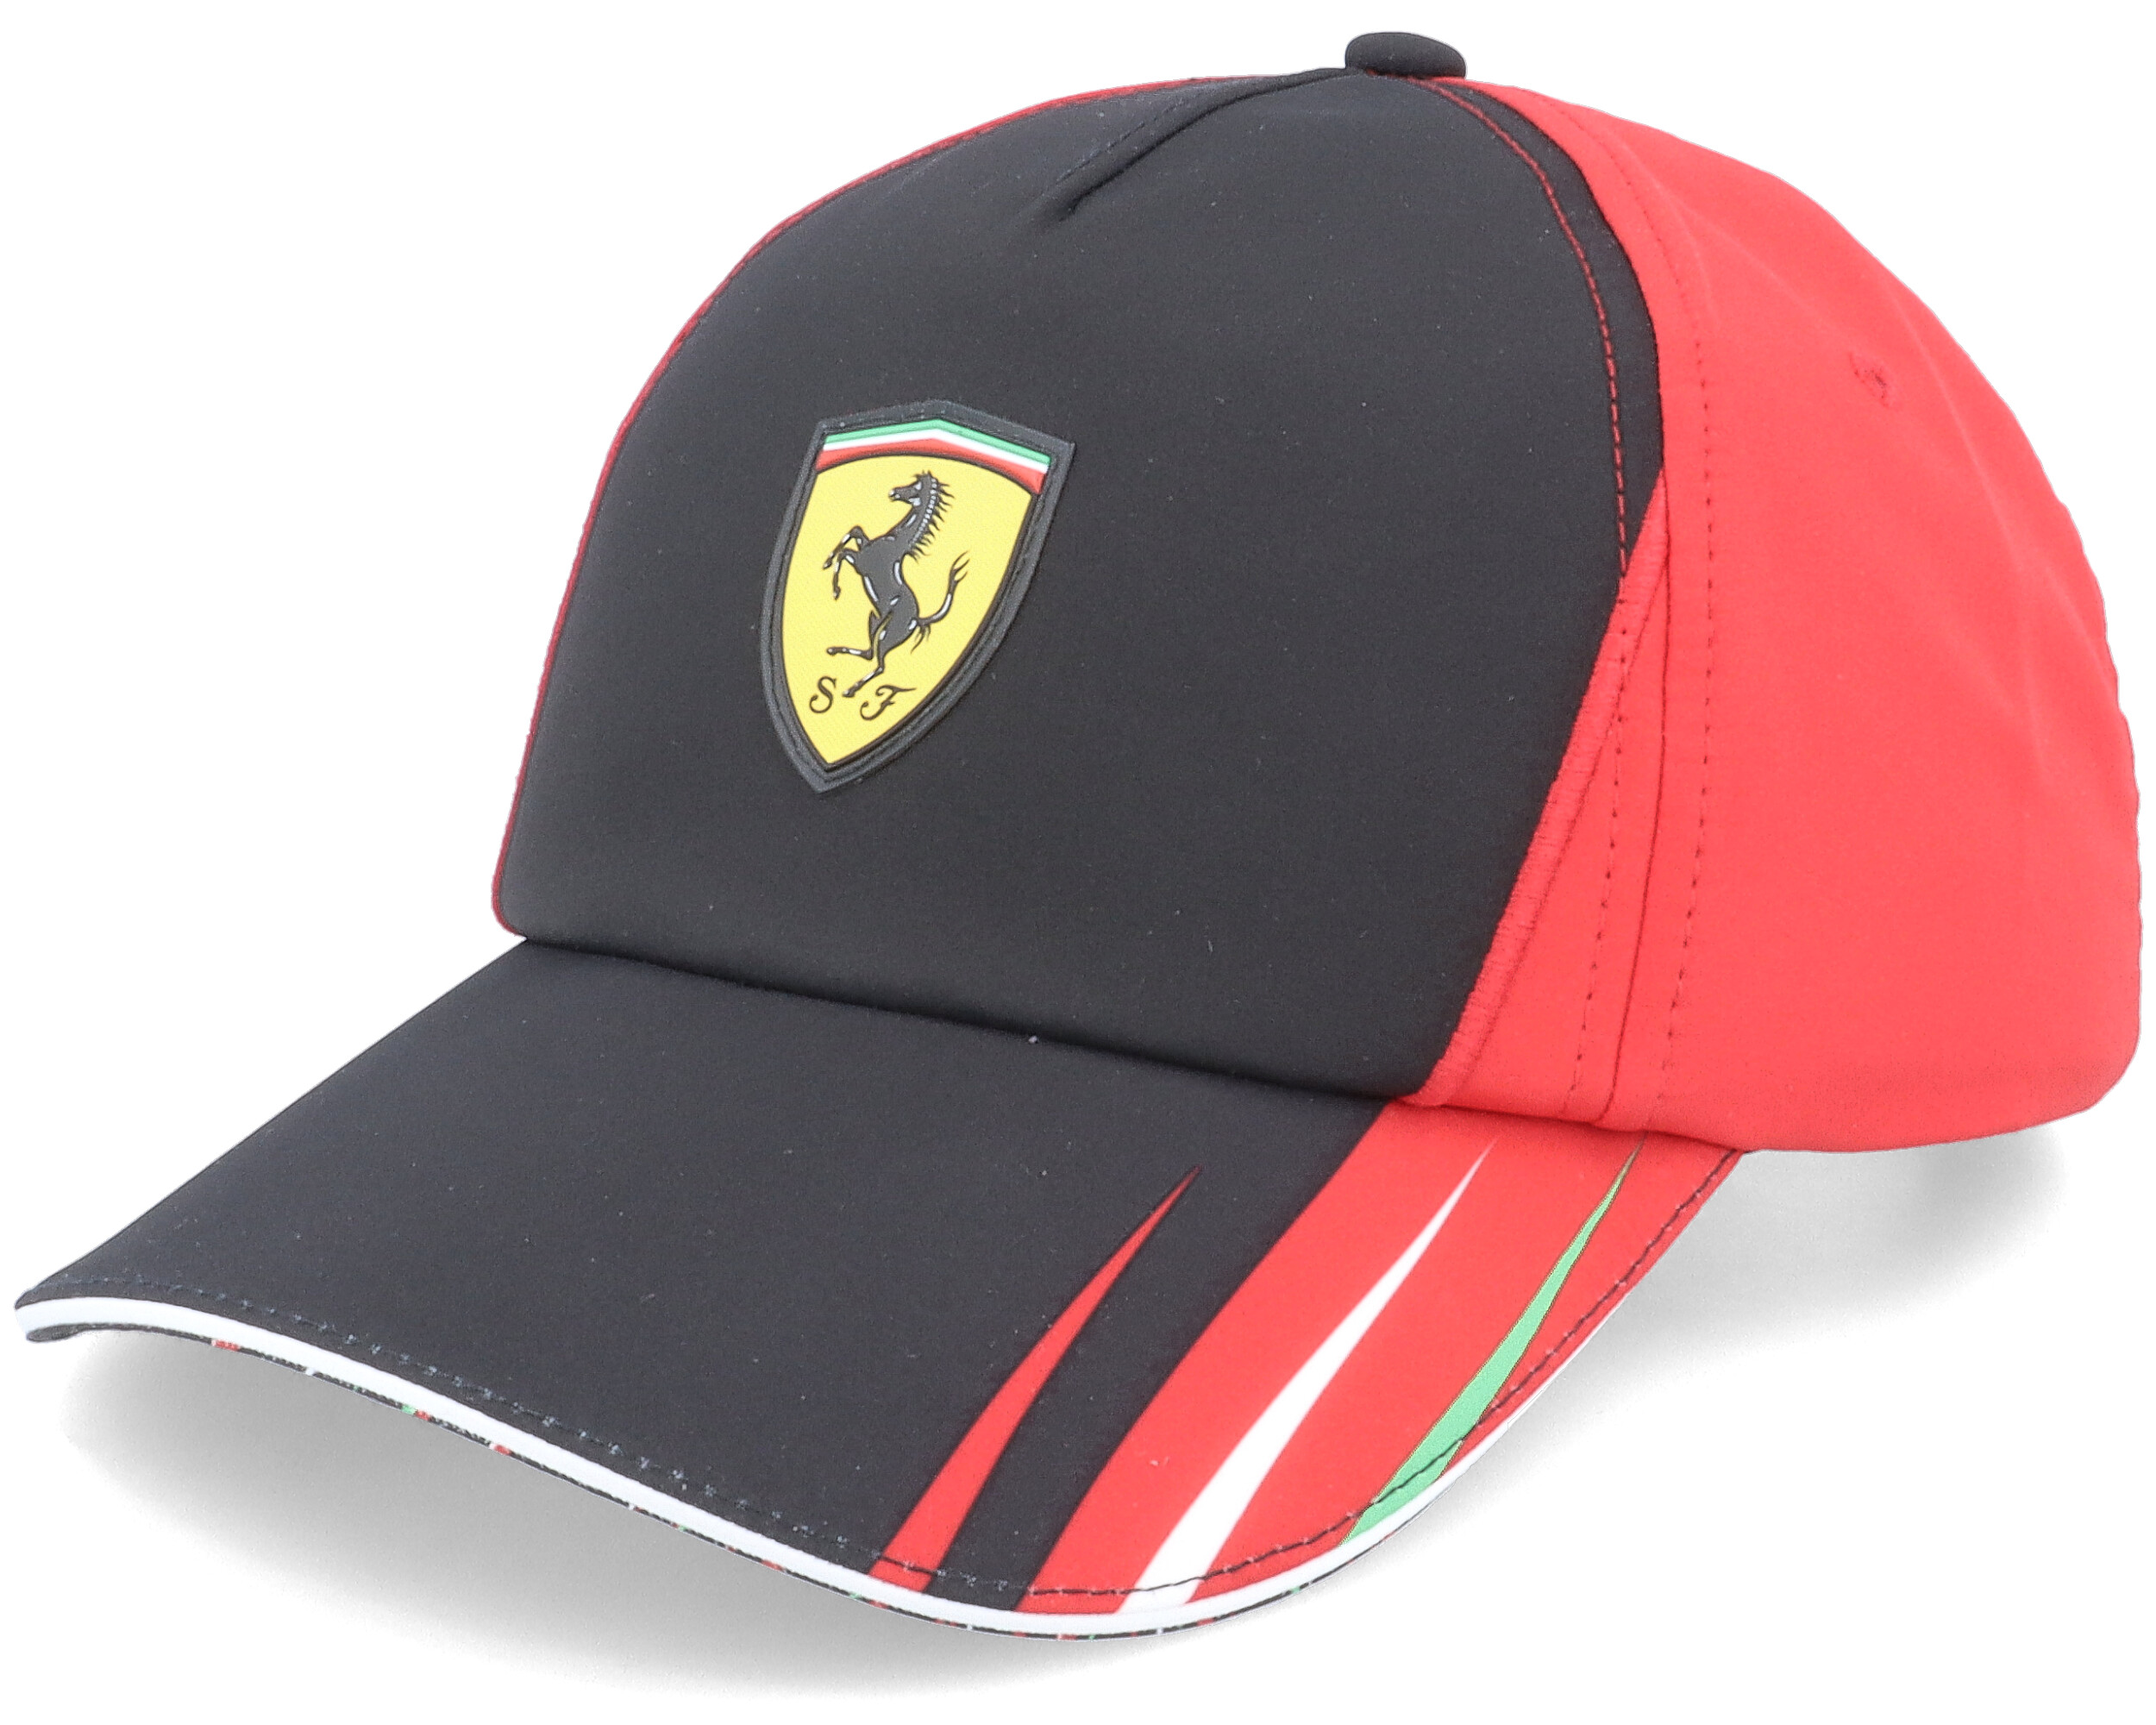 Ferrari Team Black/Red Adjustable Formula One Cap Hatstore.de